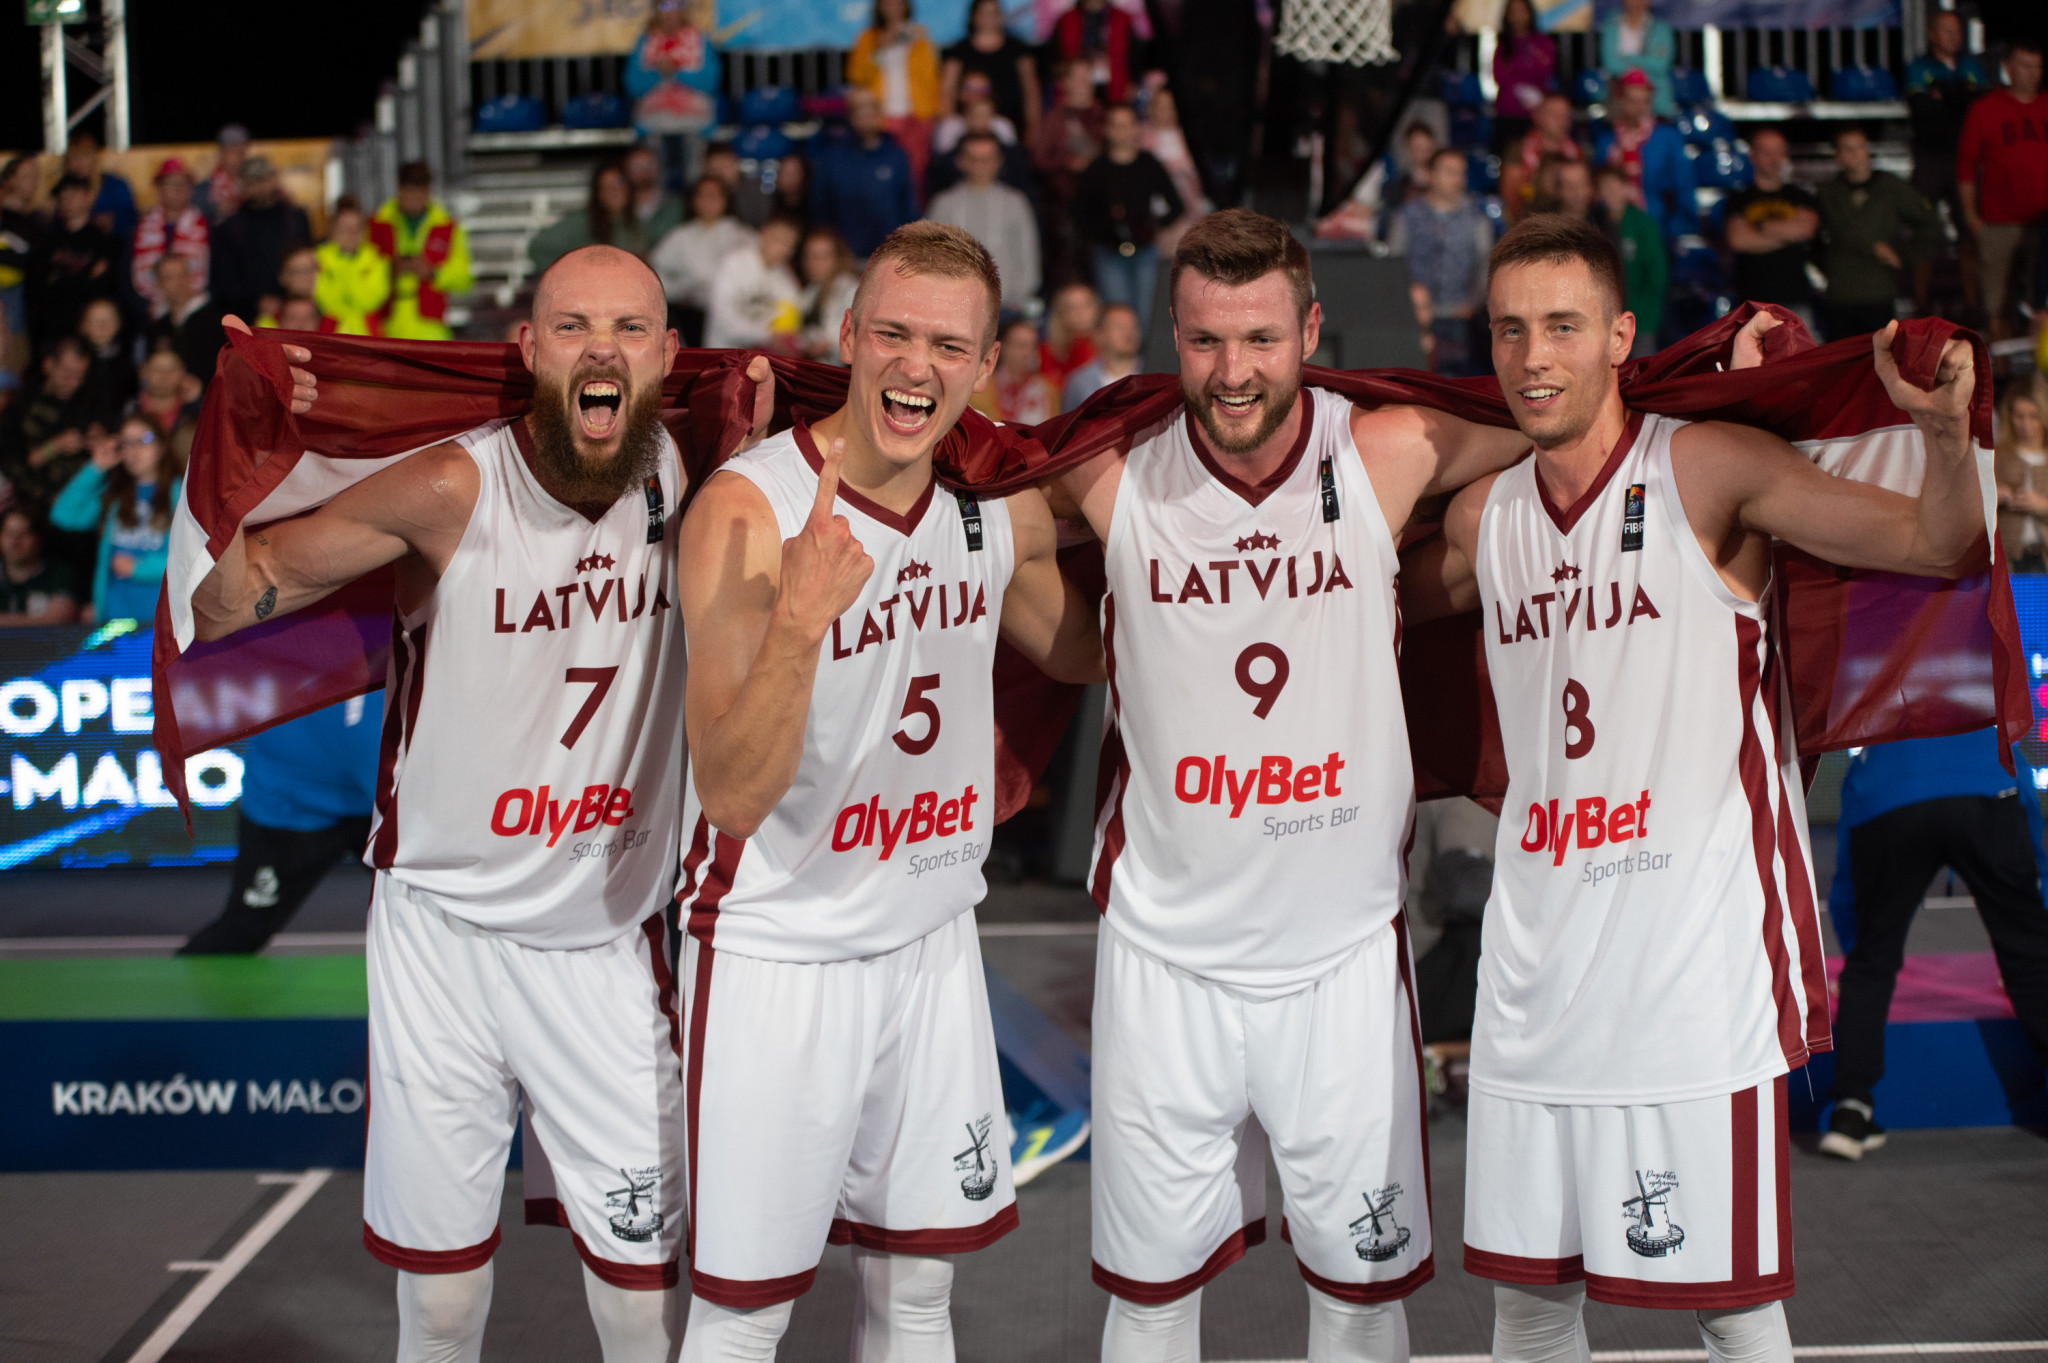 Latvia won the men's 3x3 basketball final in impressive fashion 19-11 against Belgium ©Kraków-Małopolska 2023